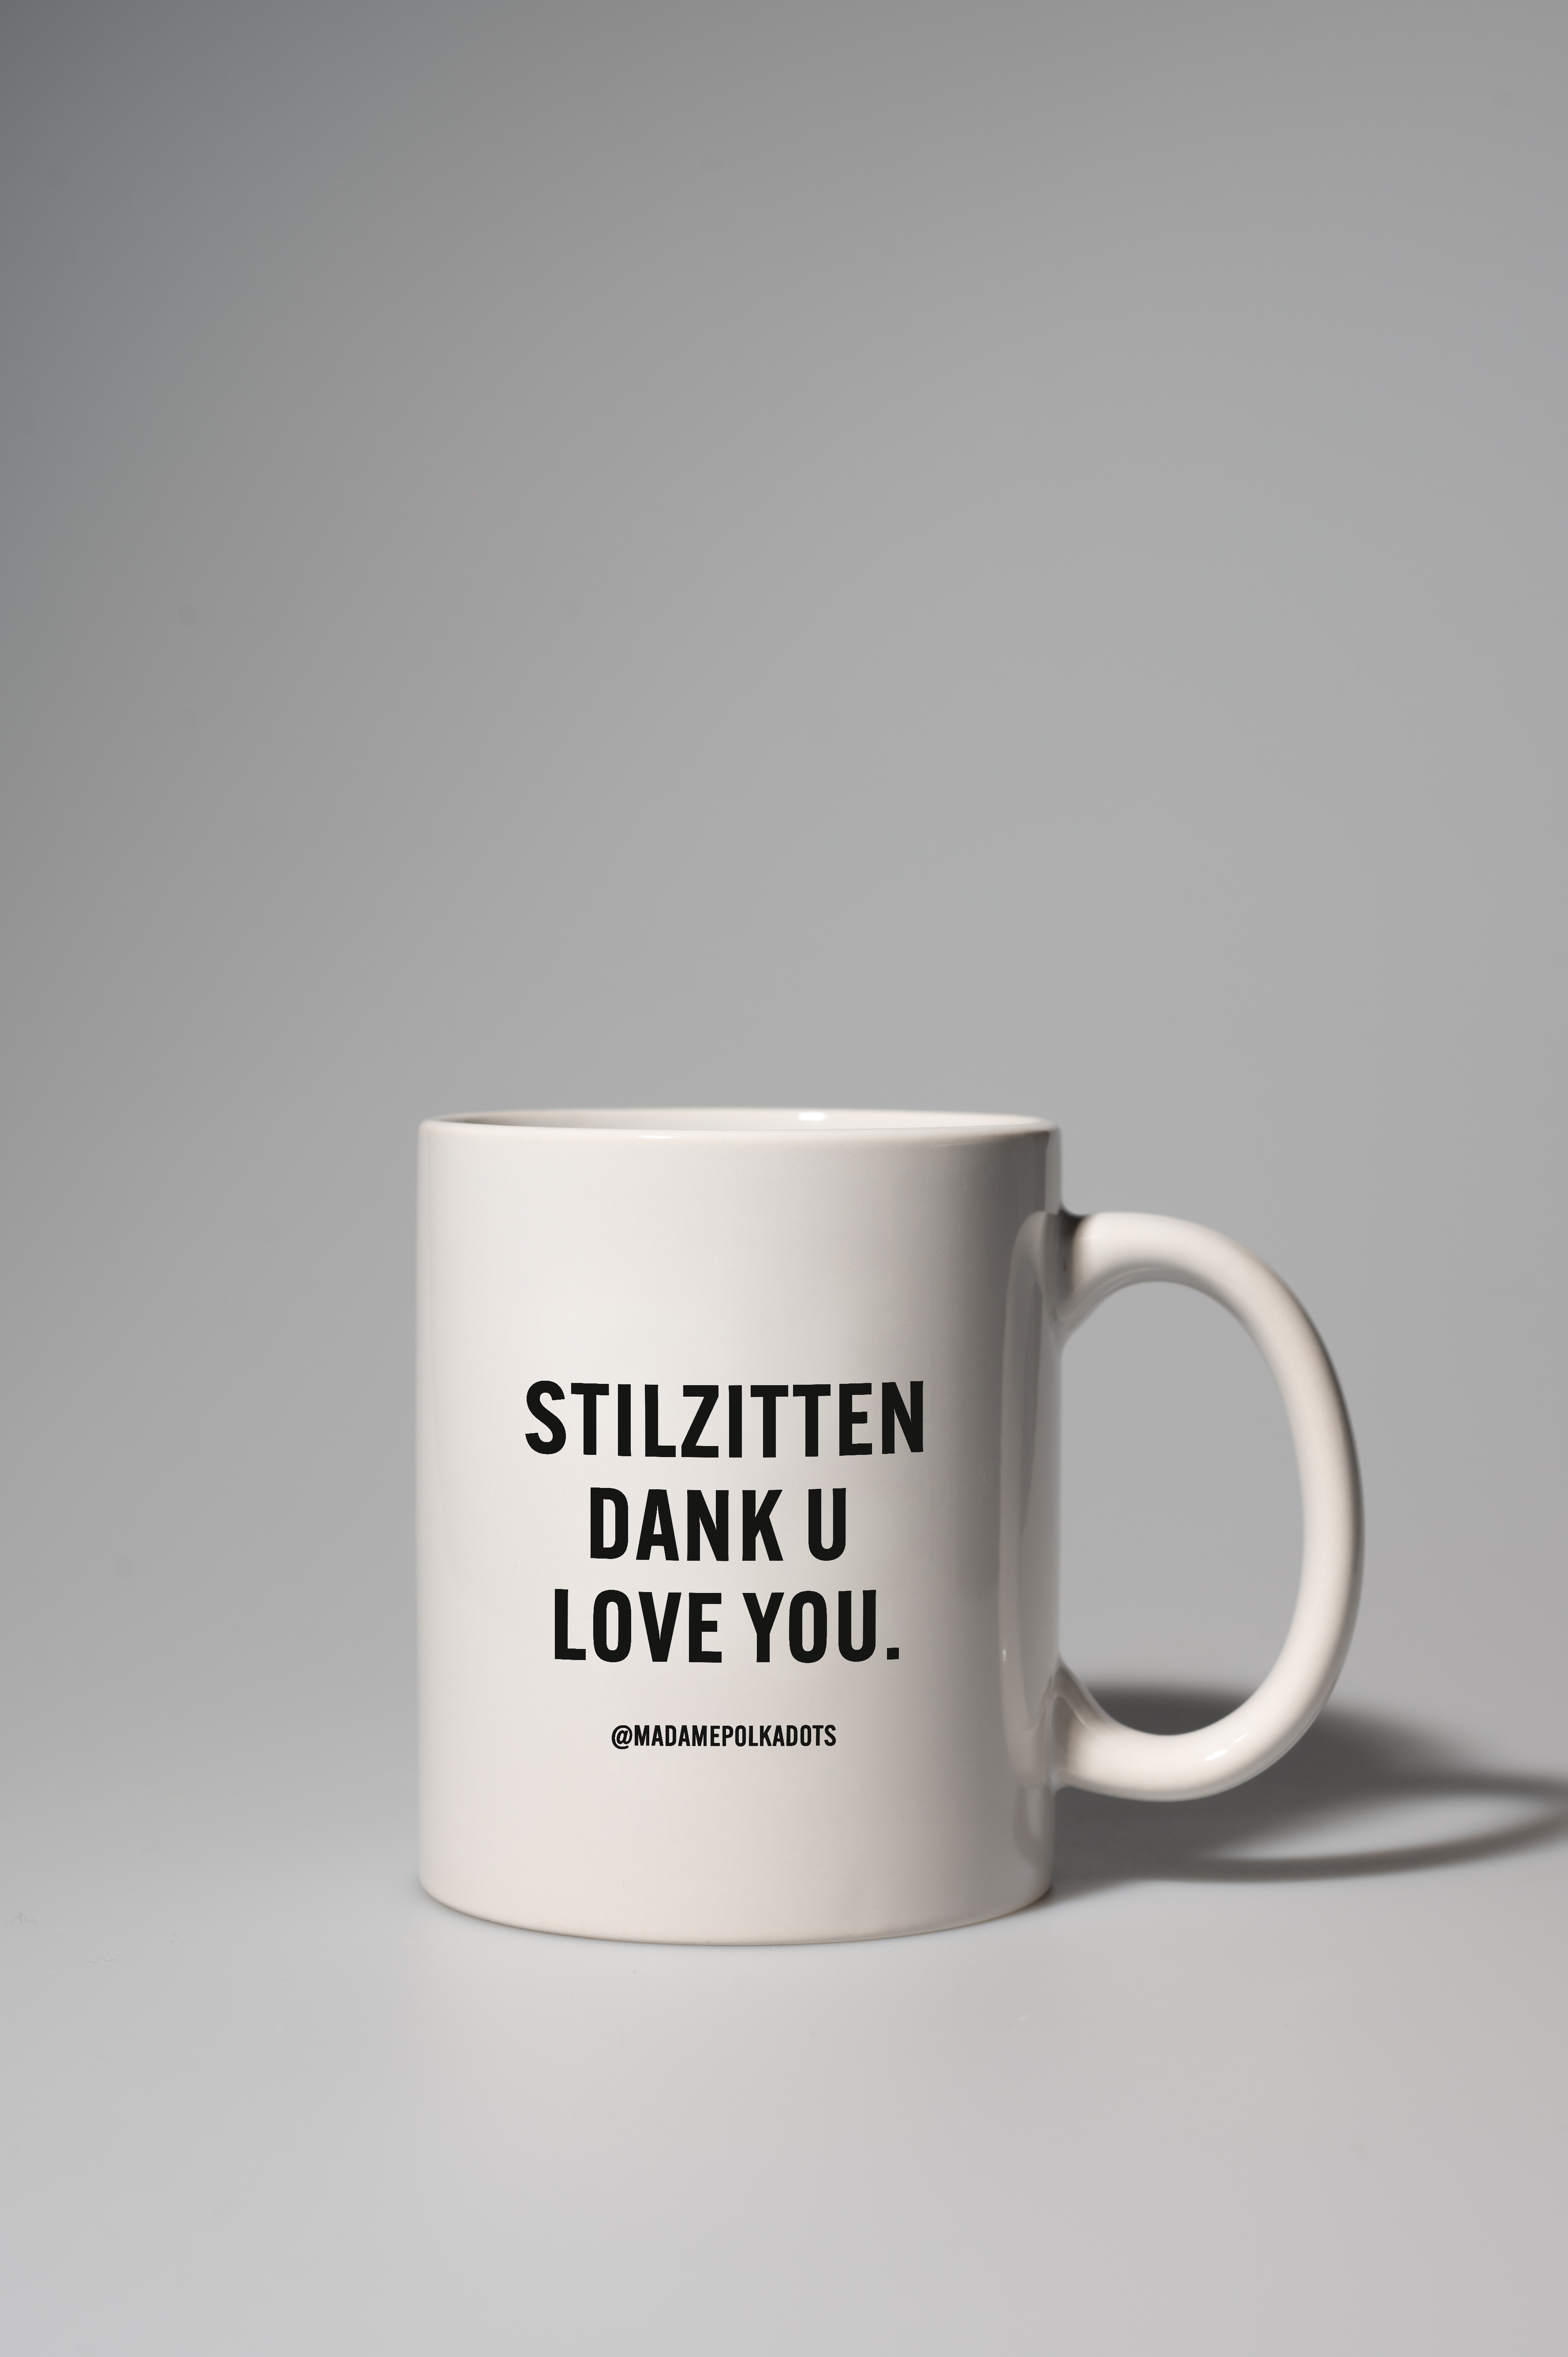 Stilzitten, dank u, love you Coffee mug